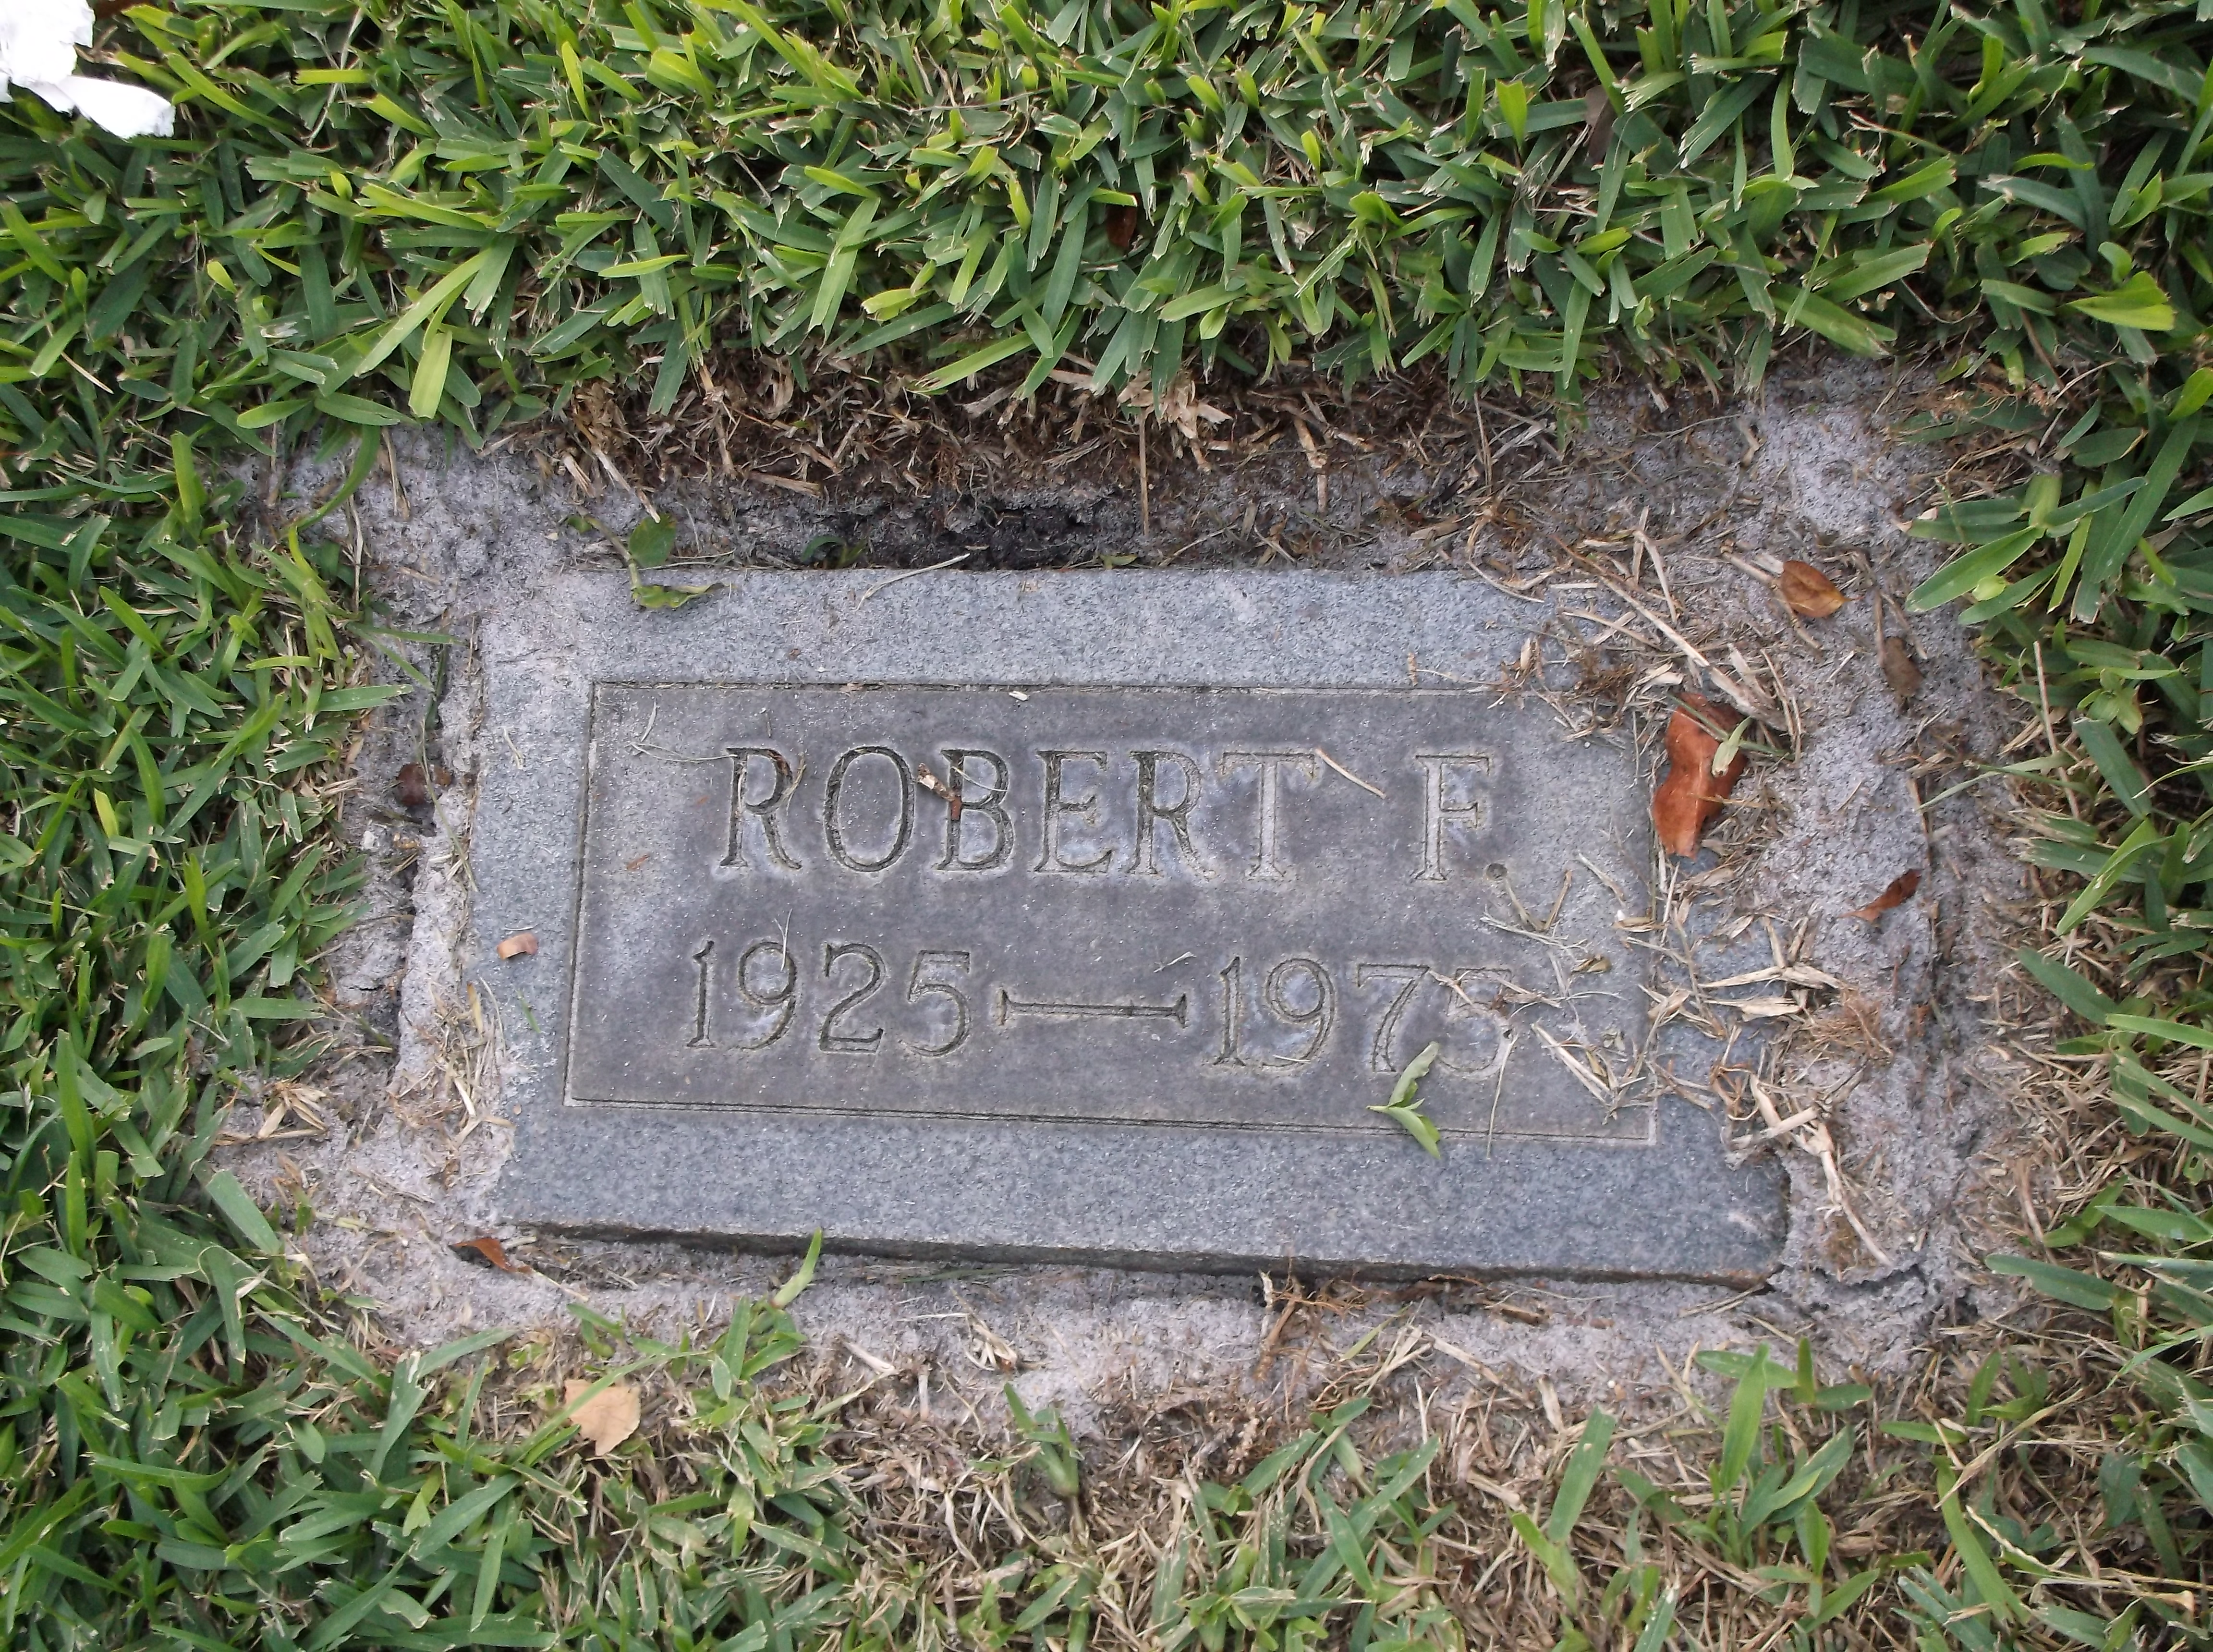 Robert F Day